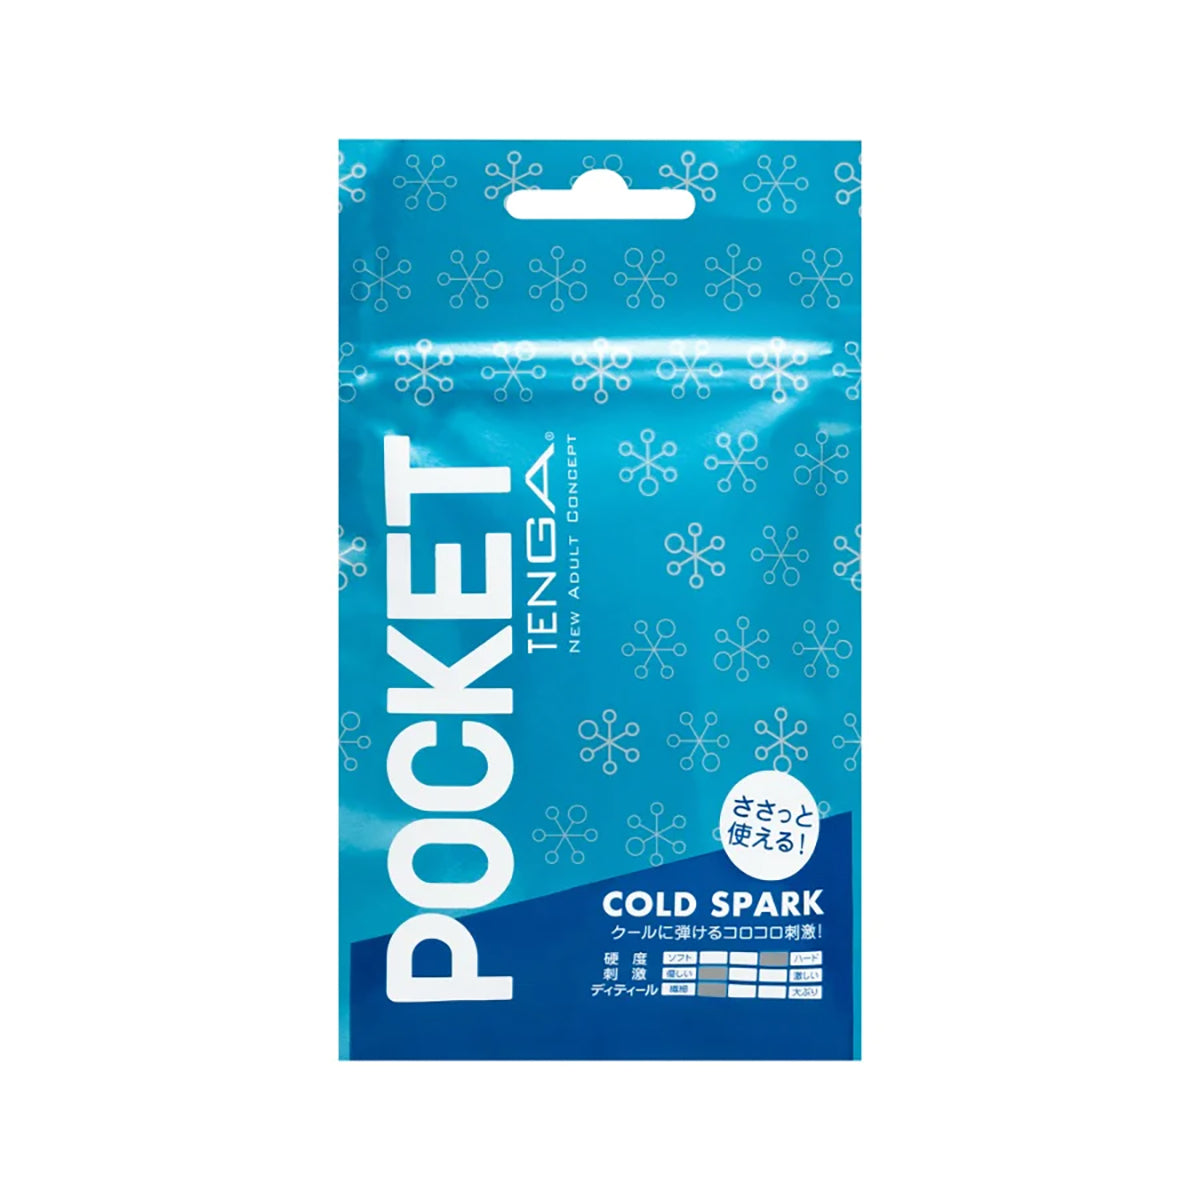 TENGA Pocket Cold Spark